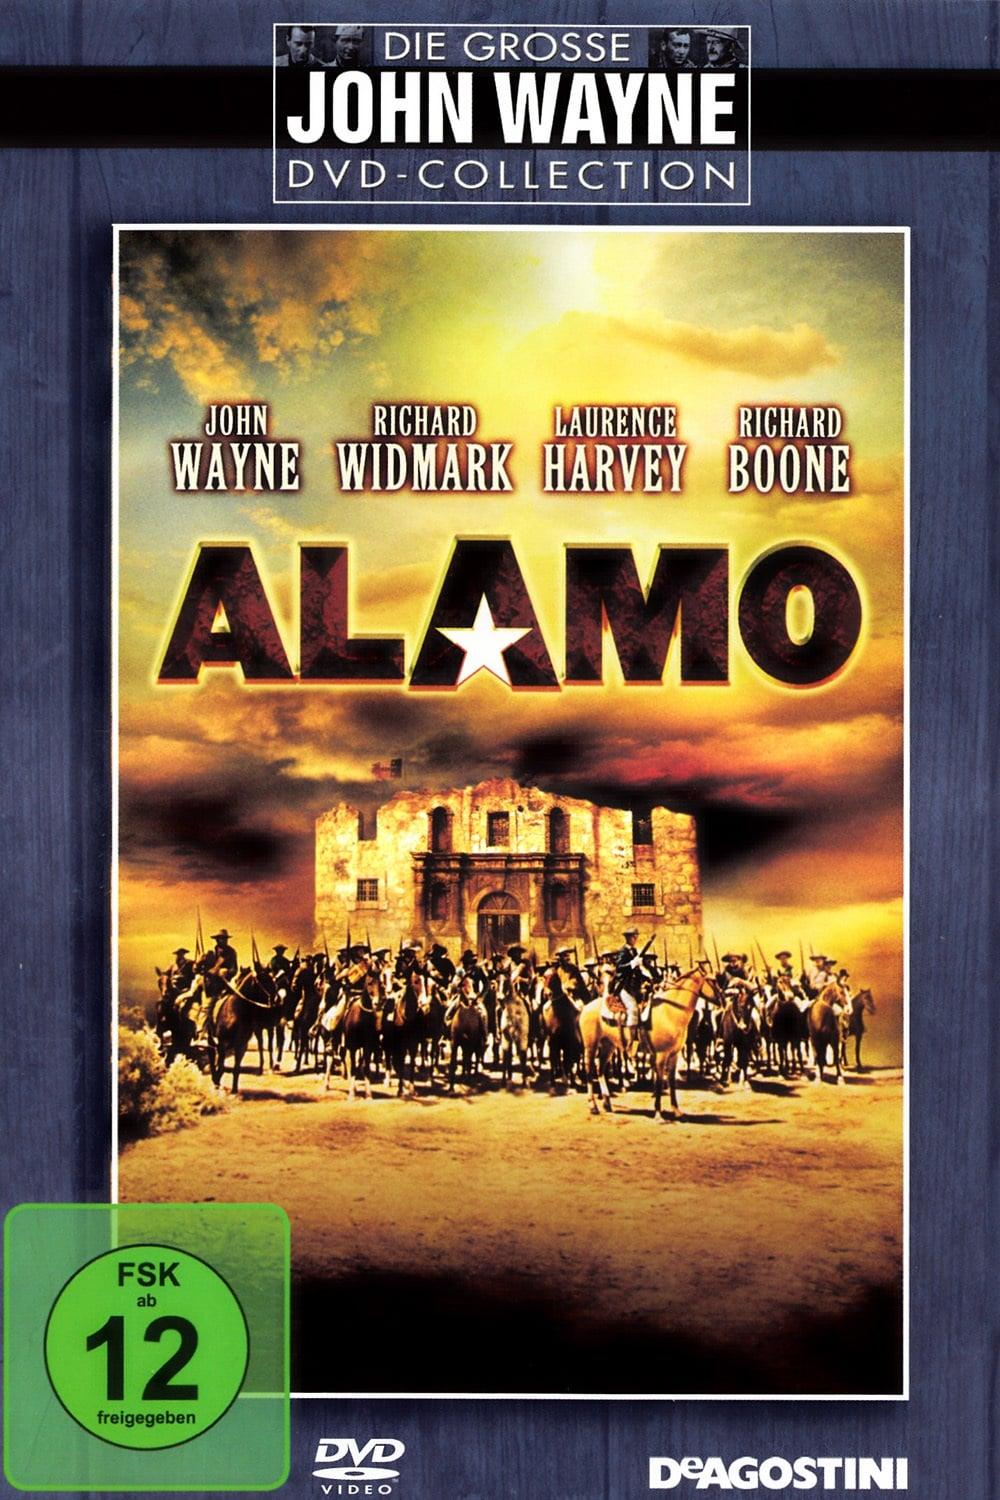 Alamo poster